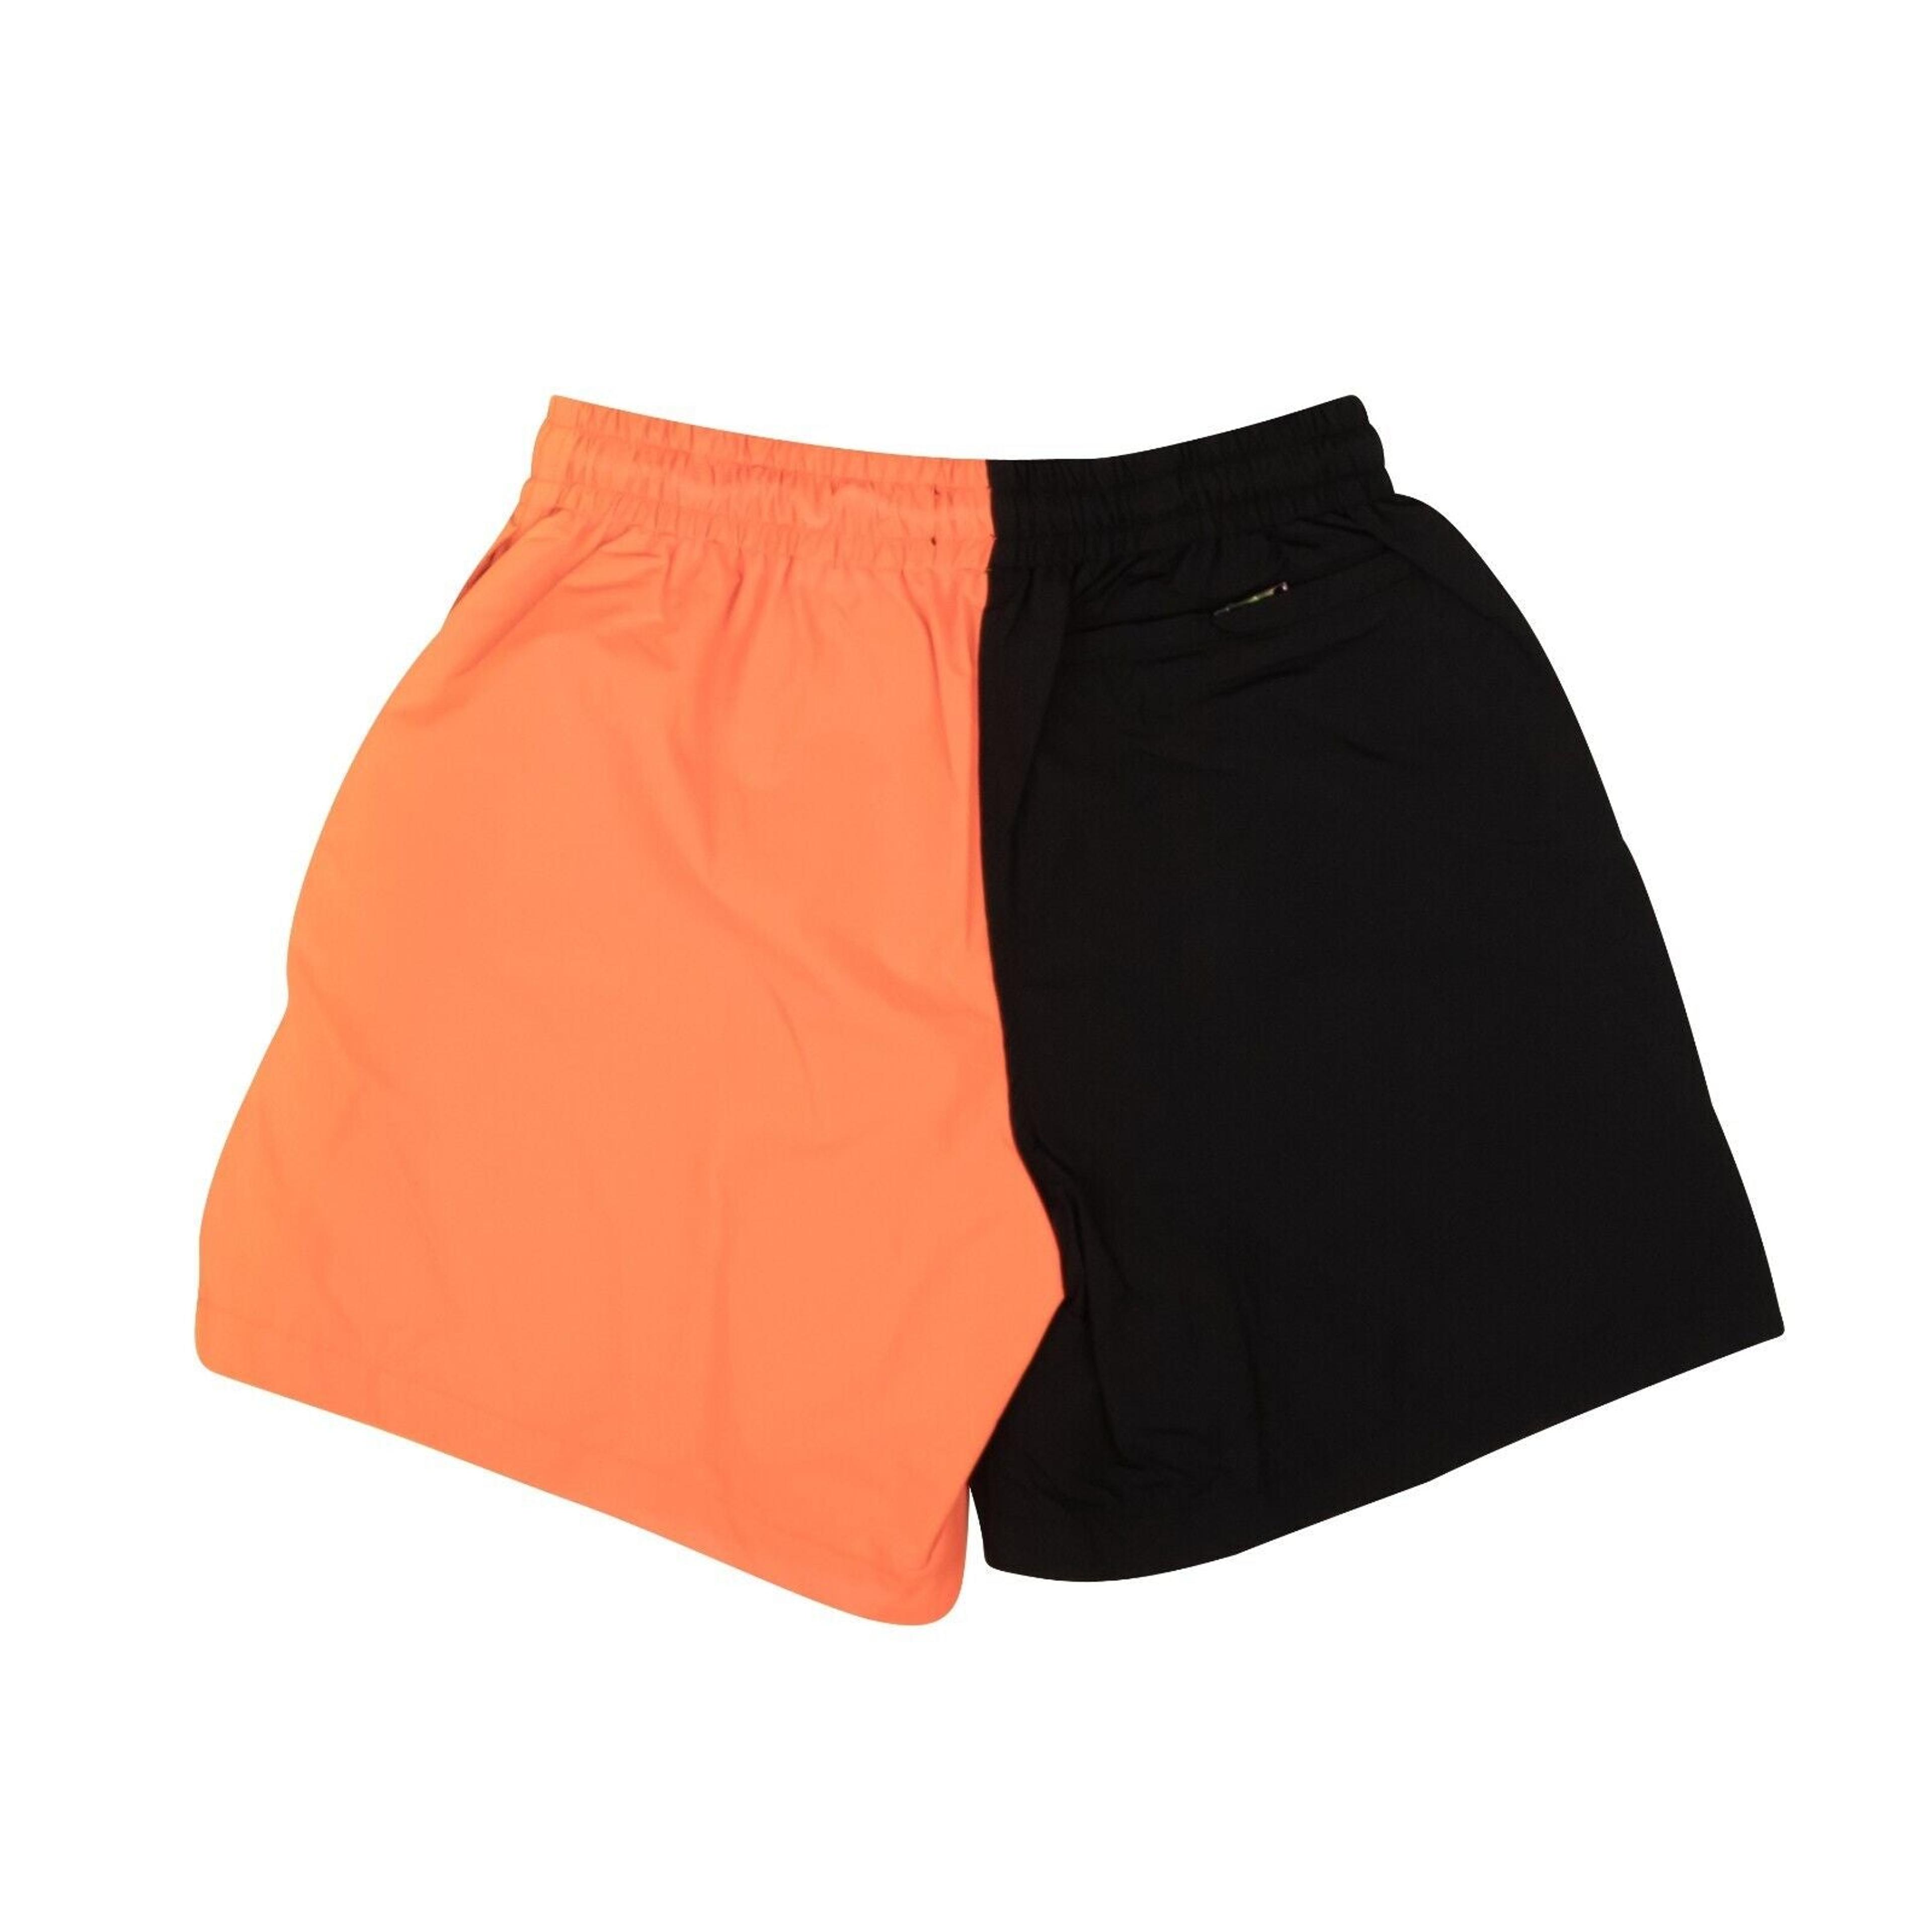 Alternate View 2 of Black And Orange Nylon Split Design Shorts